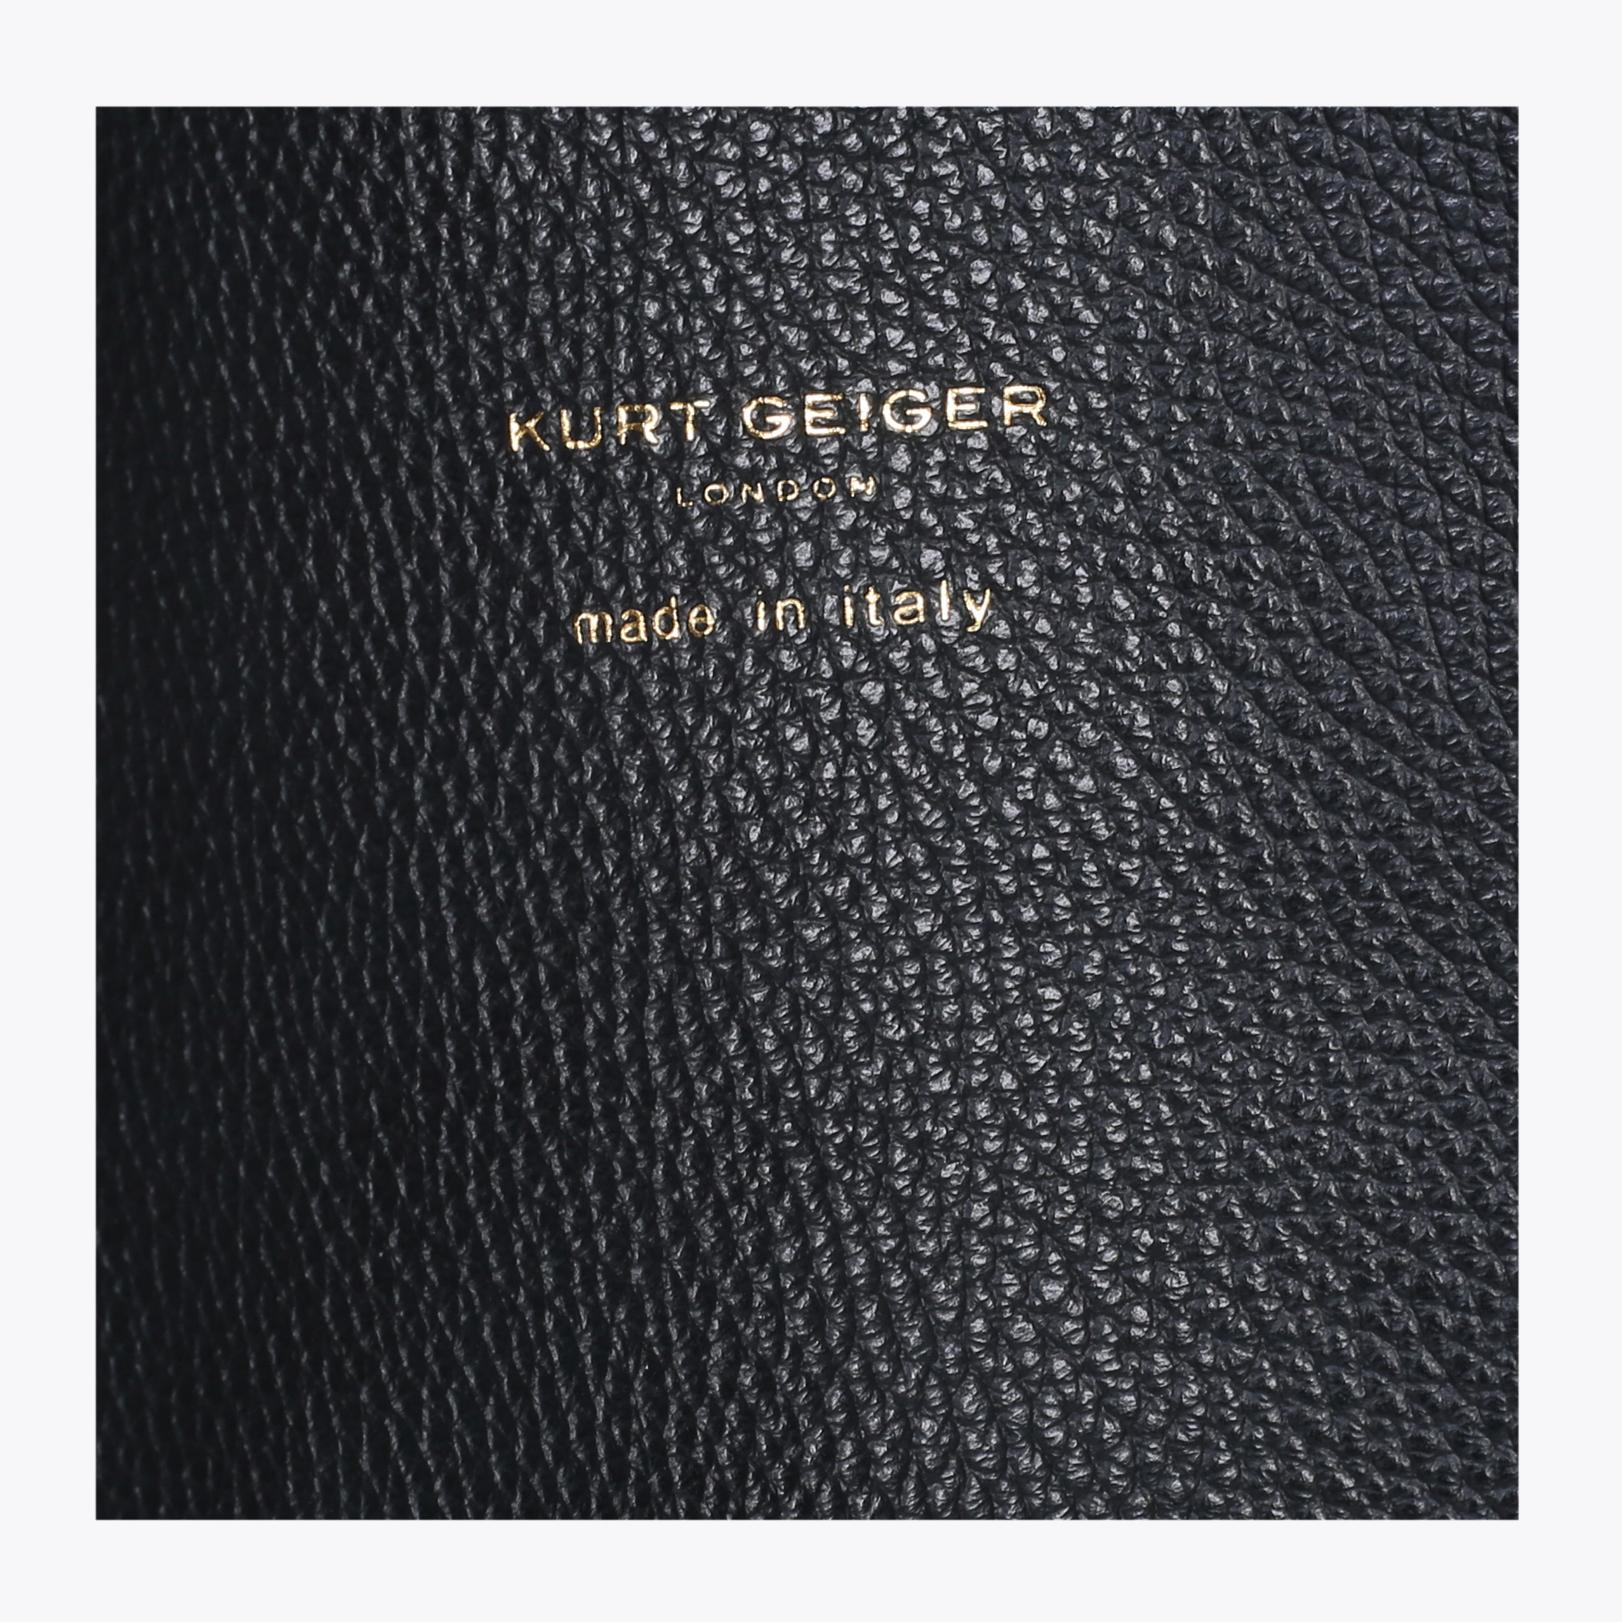 VIOLET HORIZONTAL TOTE Black Leather Tote Bag by KURT GEIGER LONDON